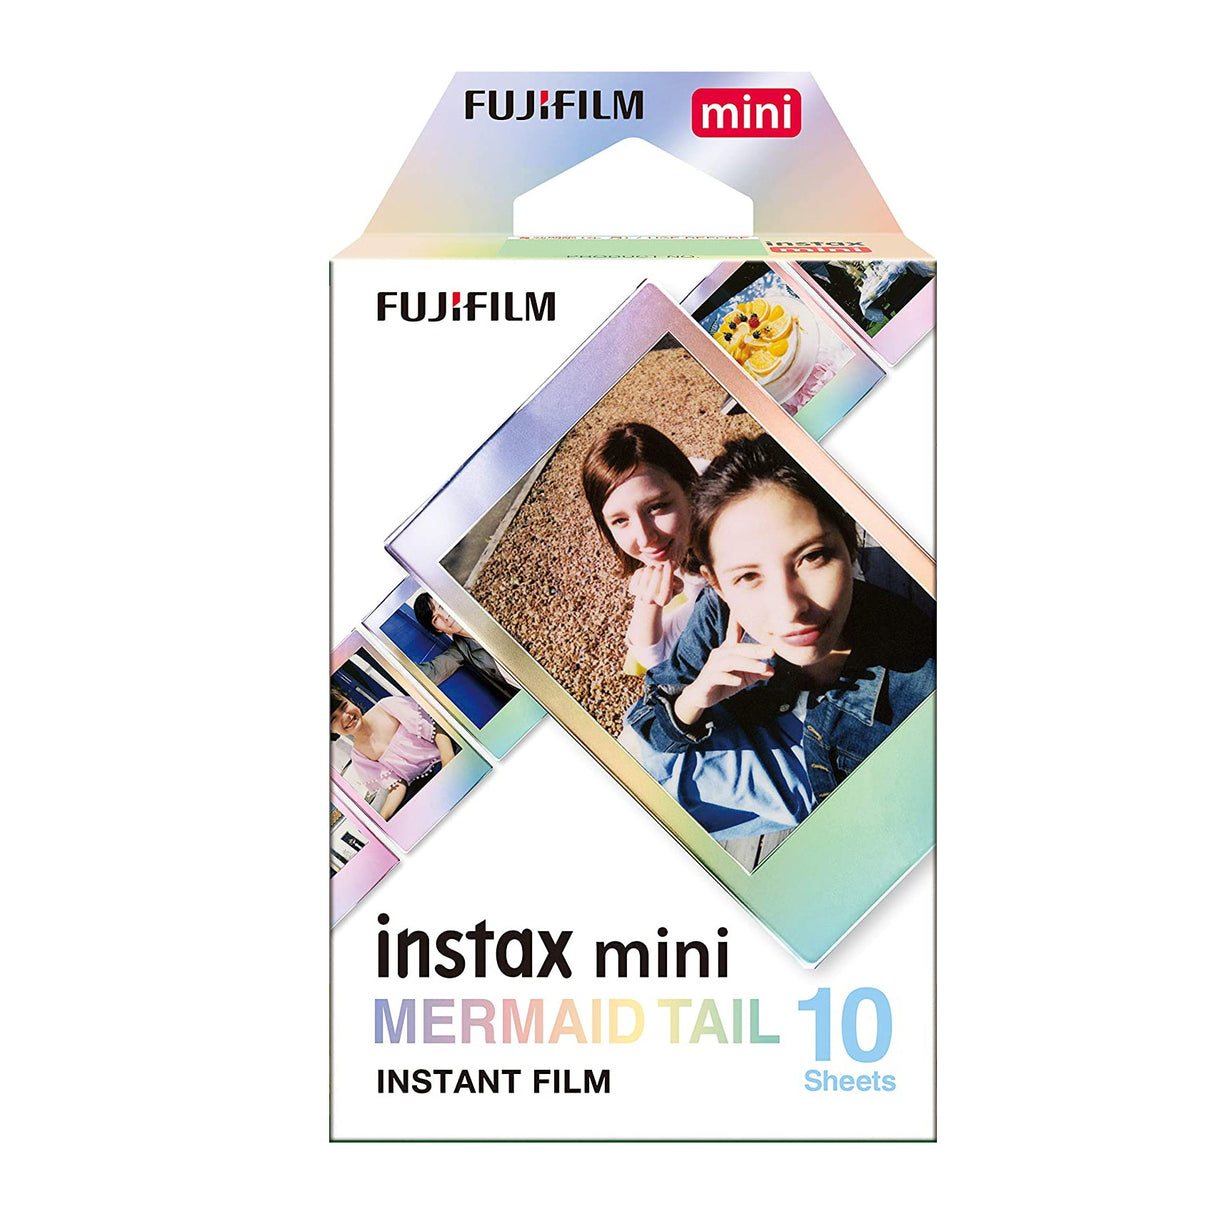 Fujifilm Instax Mini 10X1 mermaid tail Instant Film with 96-sheet Album for mini film  (Blue rose)